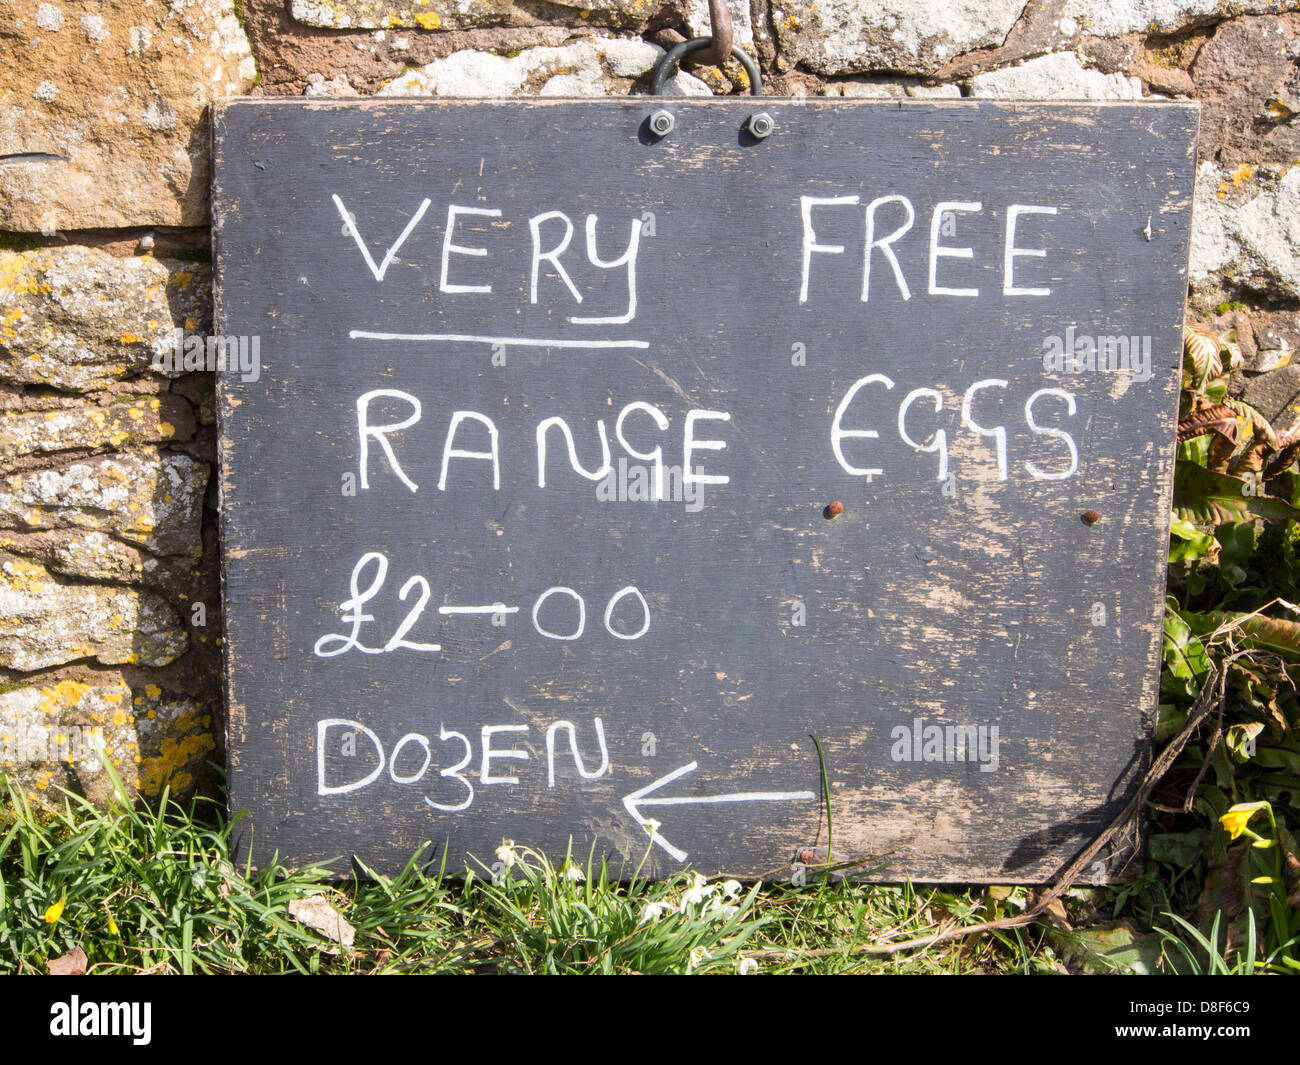 A sign for very free range eggs in Cardington, Shropshire, UK. Stock Photo